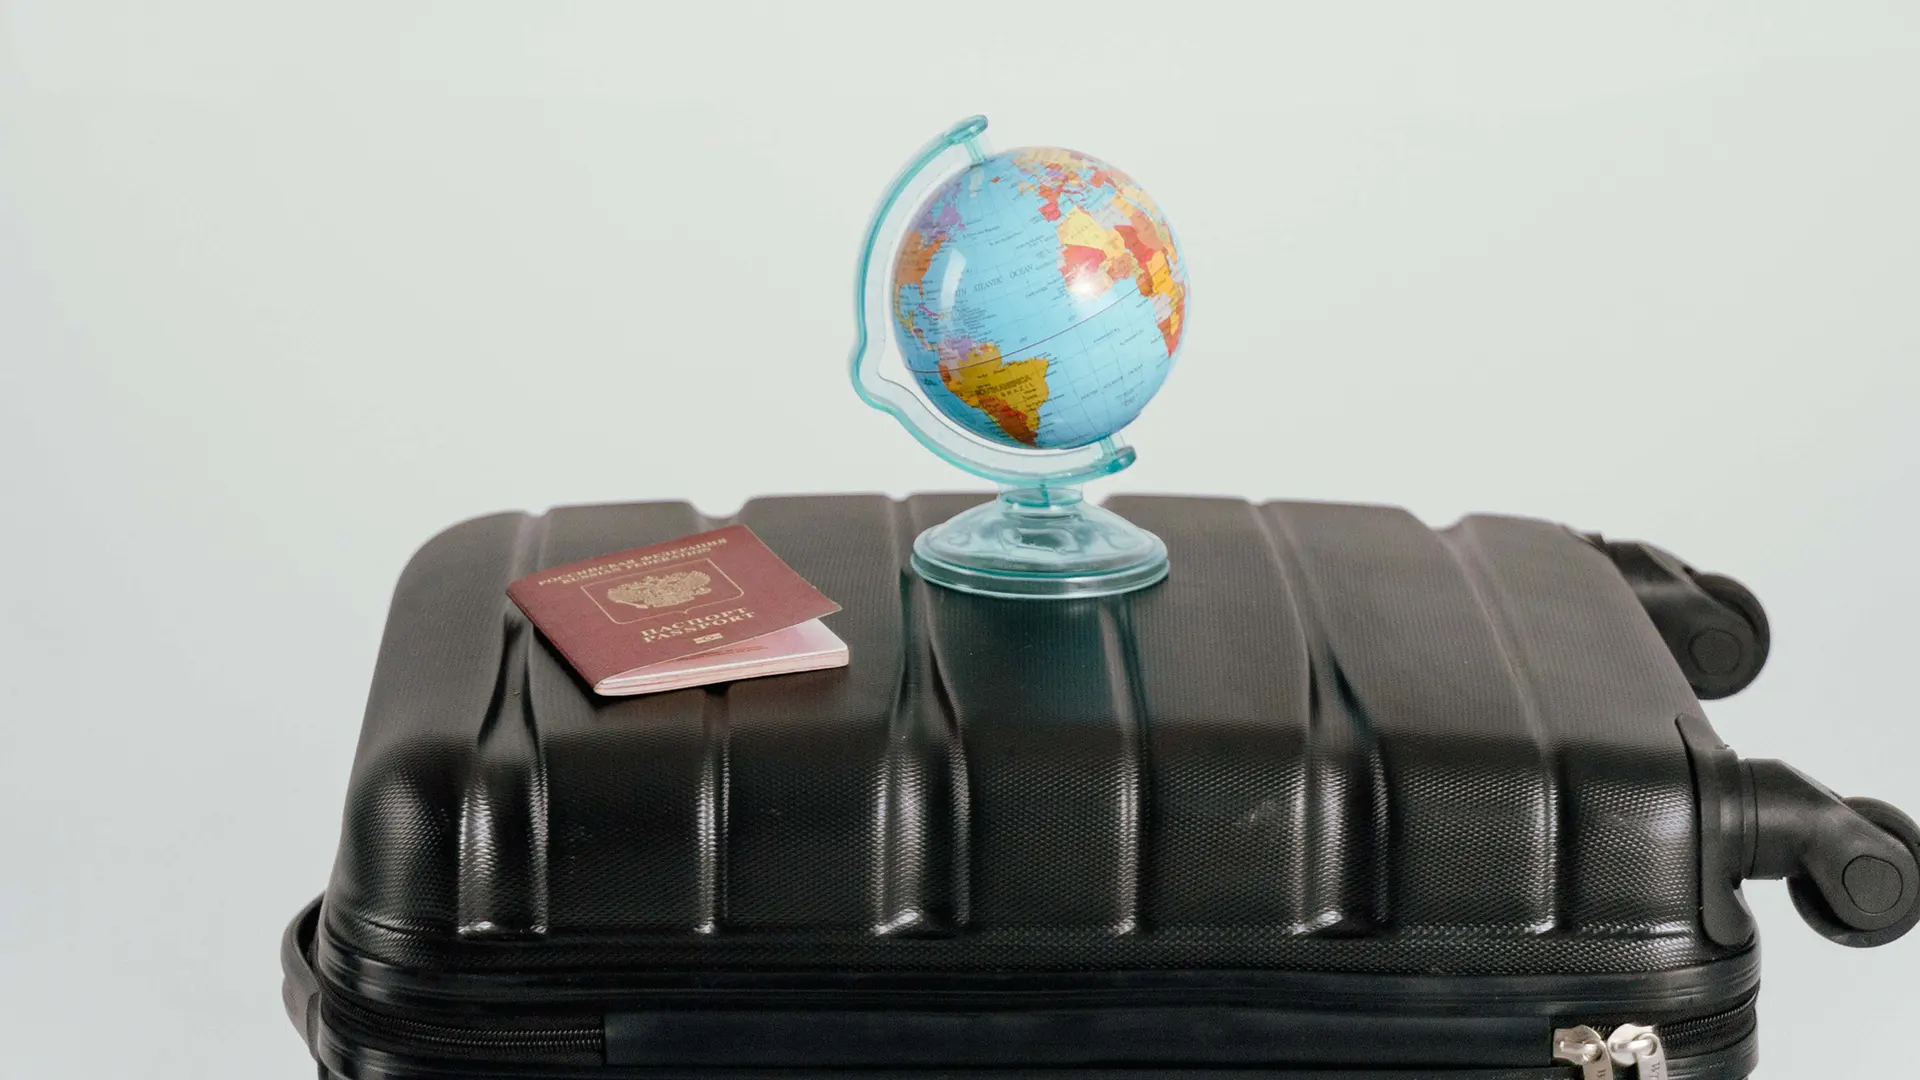 valigia con passaporto e mappamondo sopra - erasmus